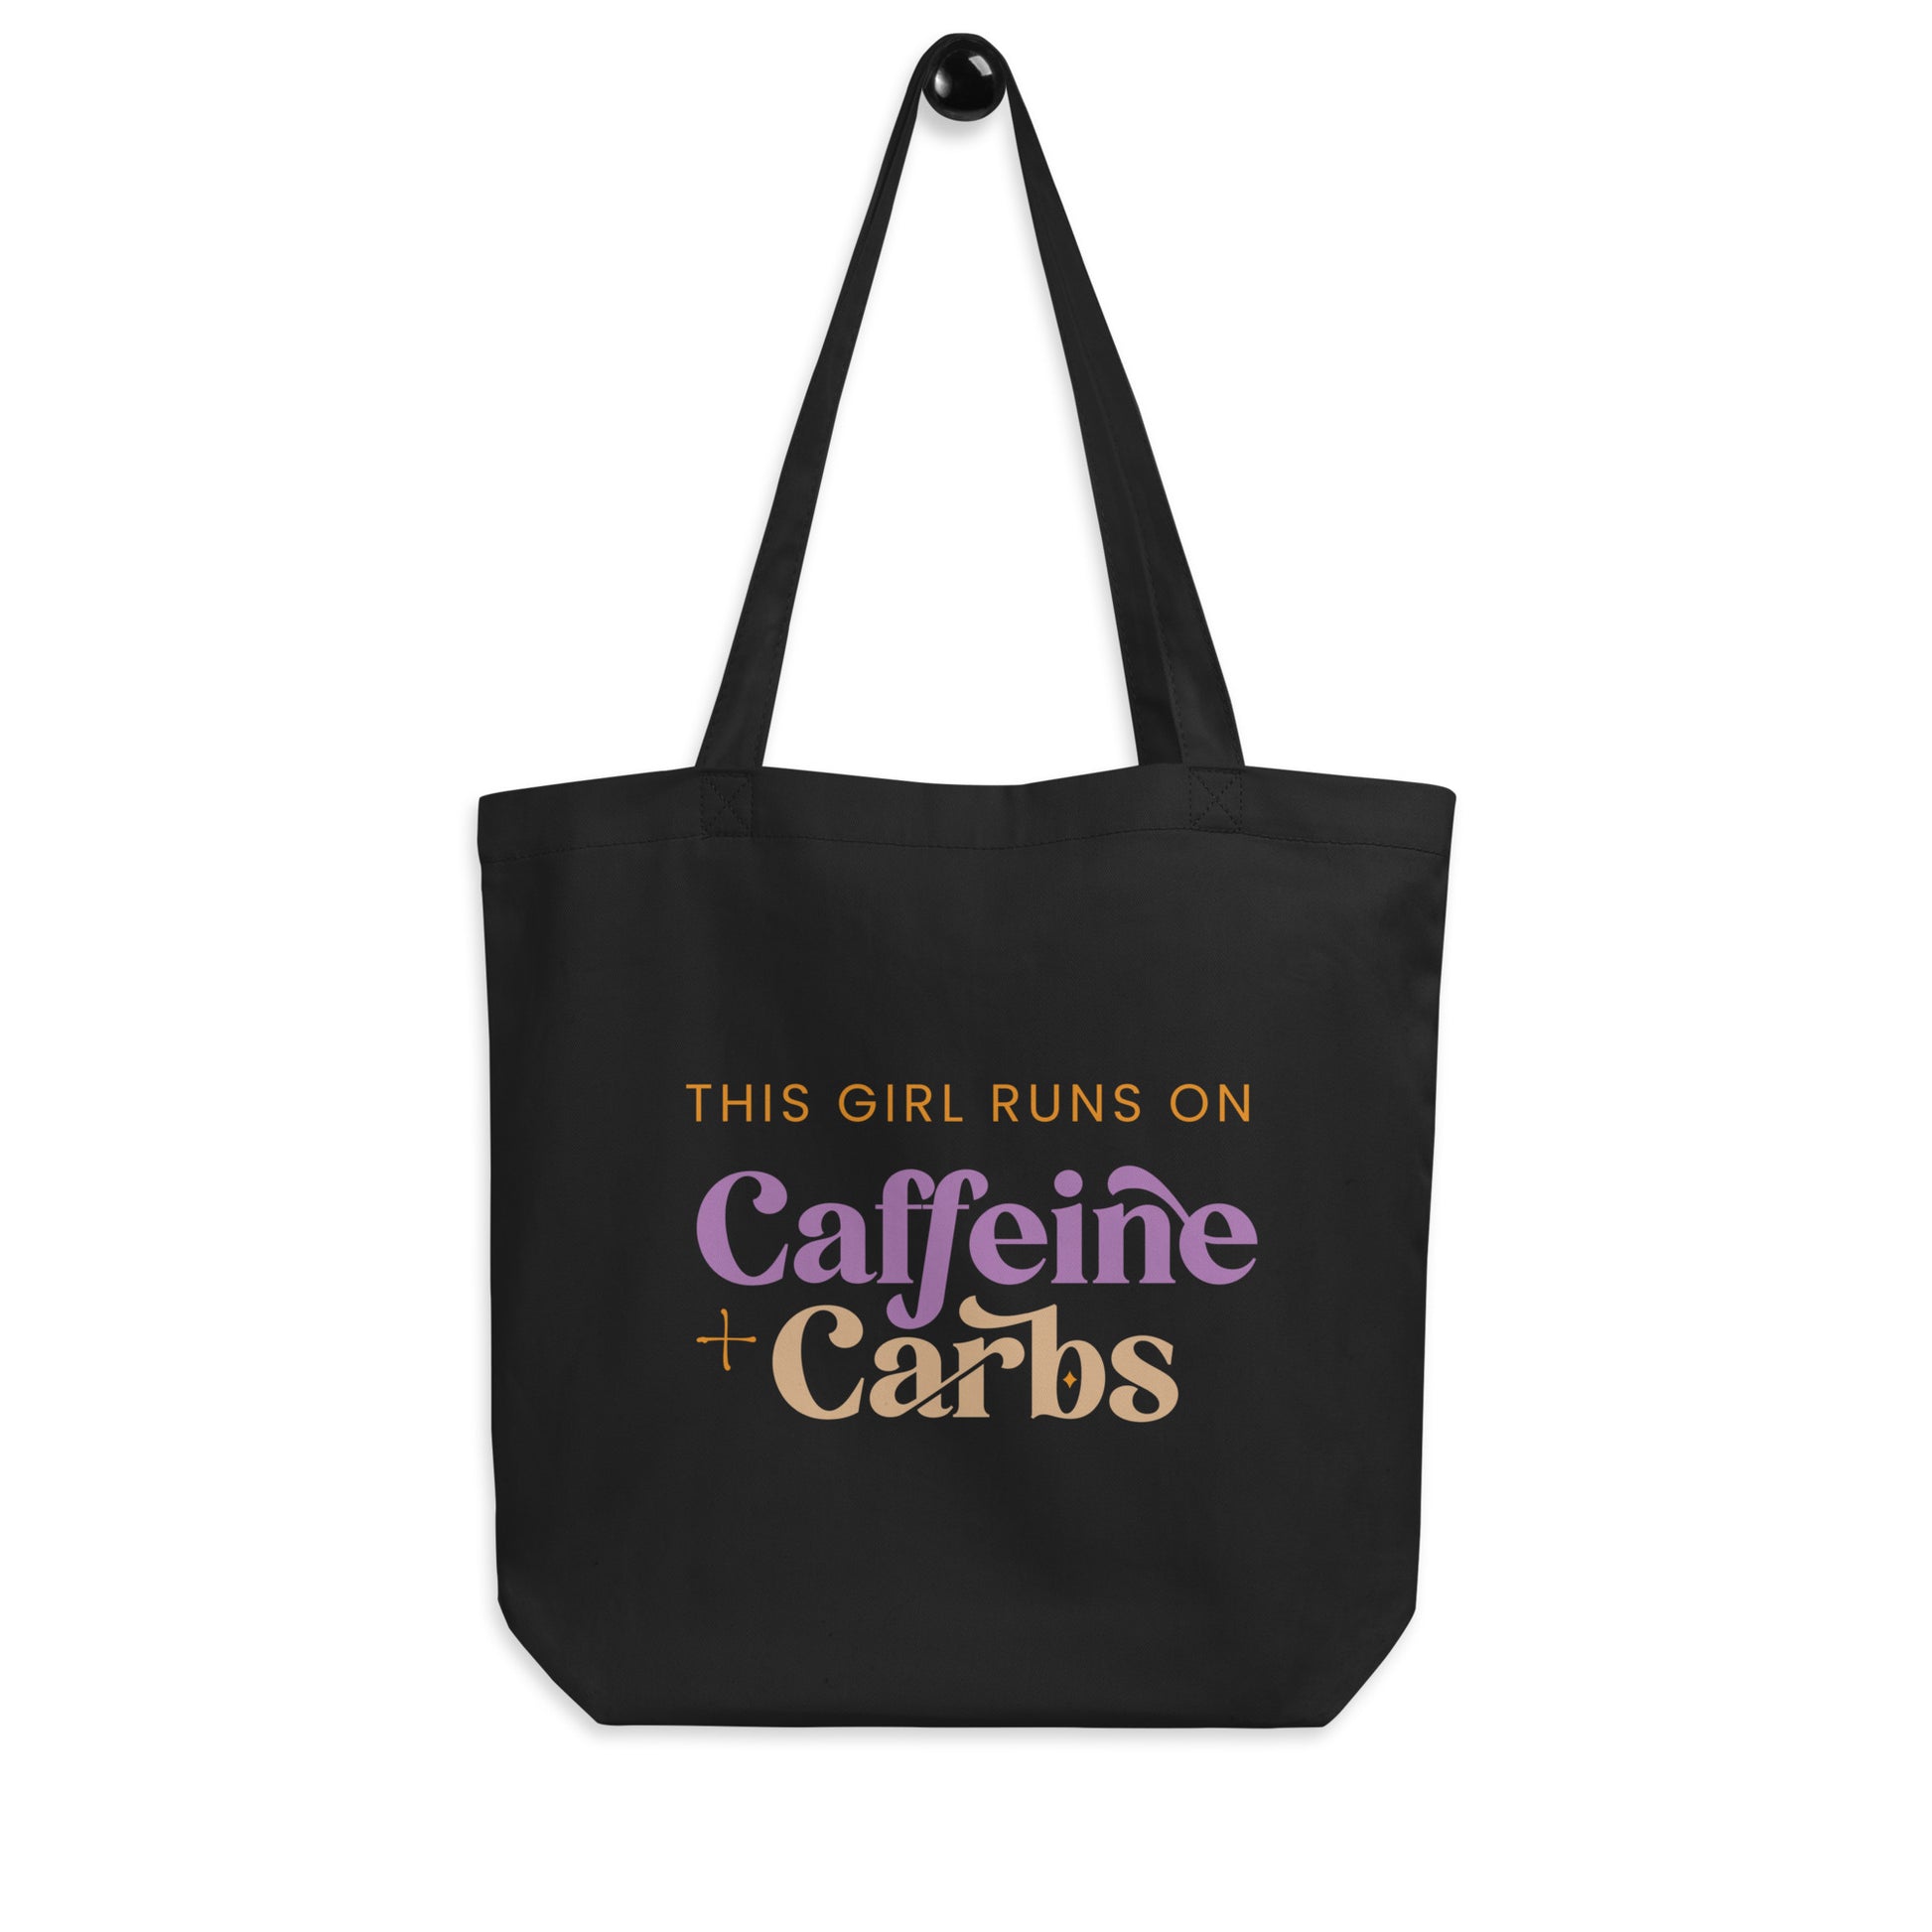 black cotton tote bag that says "This girl runs on caffeine + carbs"